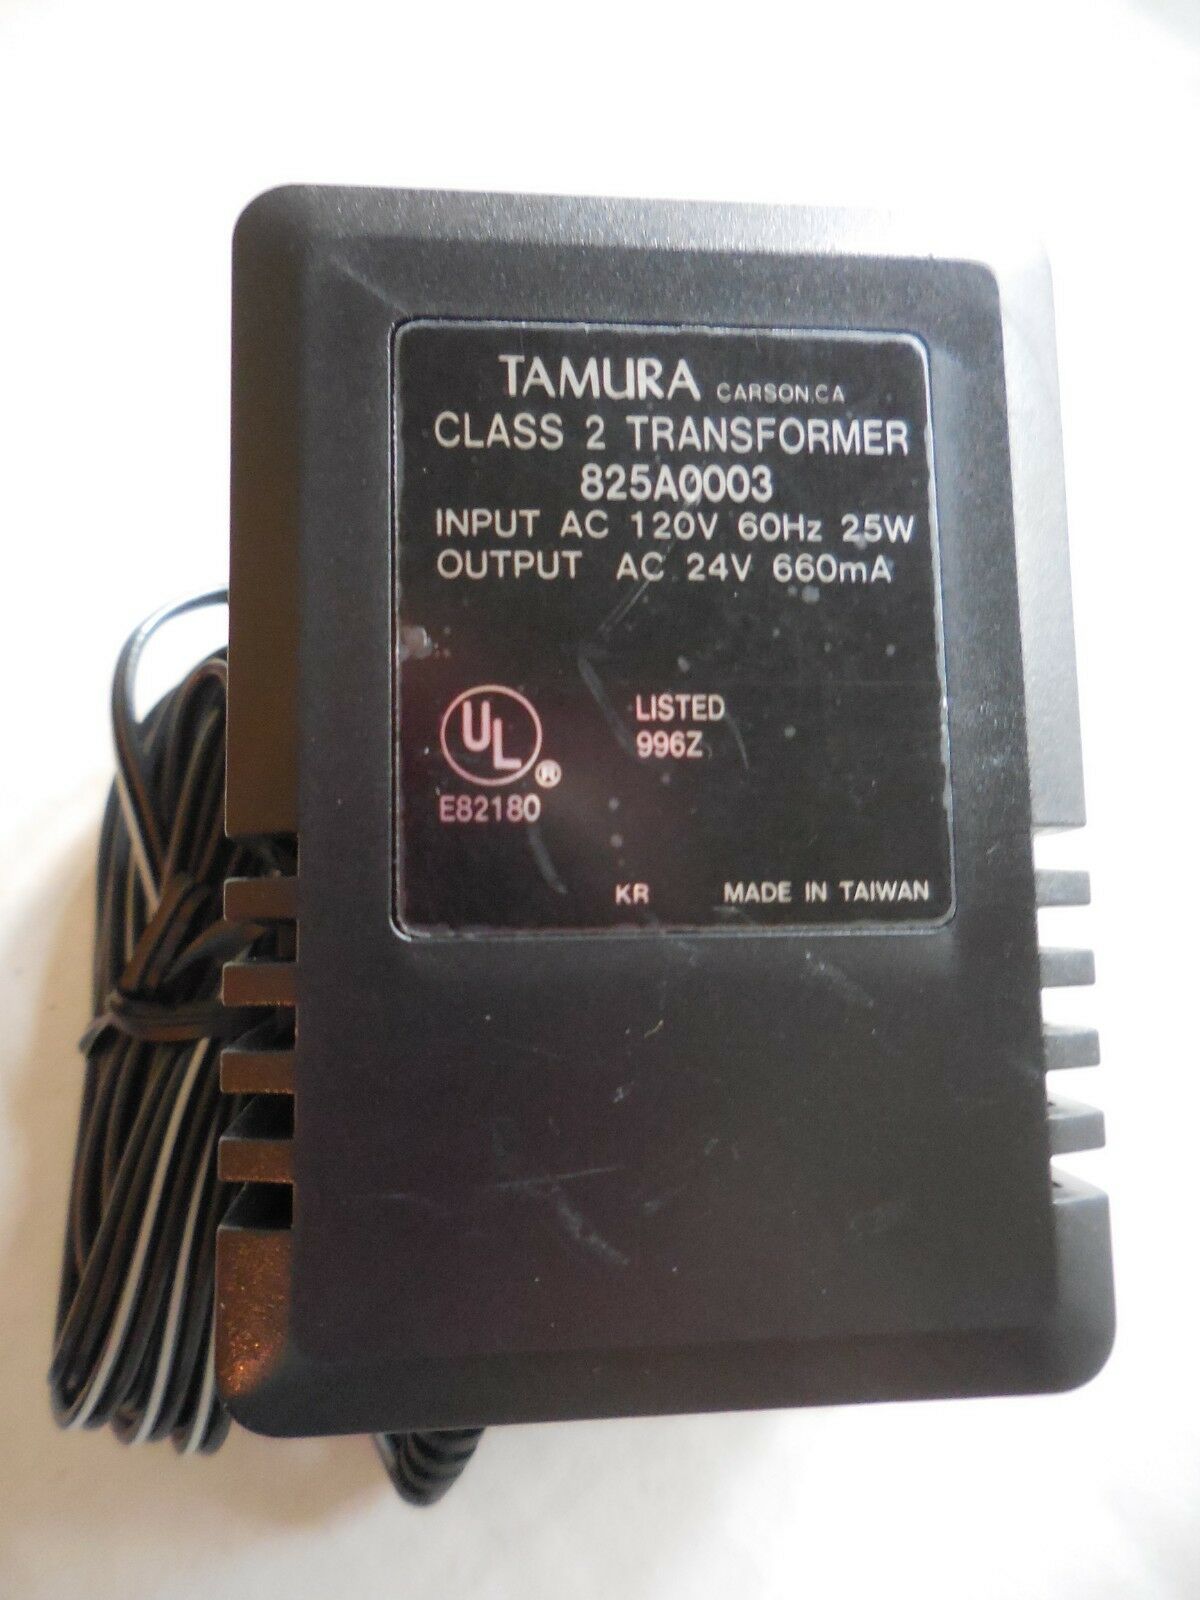 New 24V AC 660mA TAMURA 825A0003 Class 2 Transformer Power Supply Ac Adapter